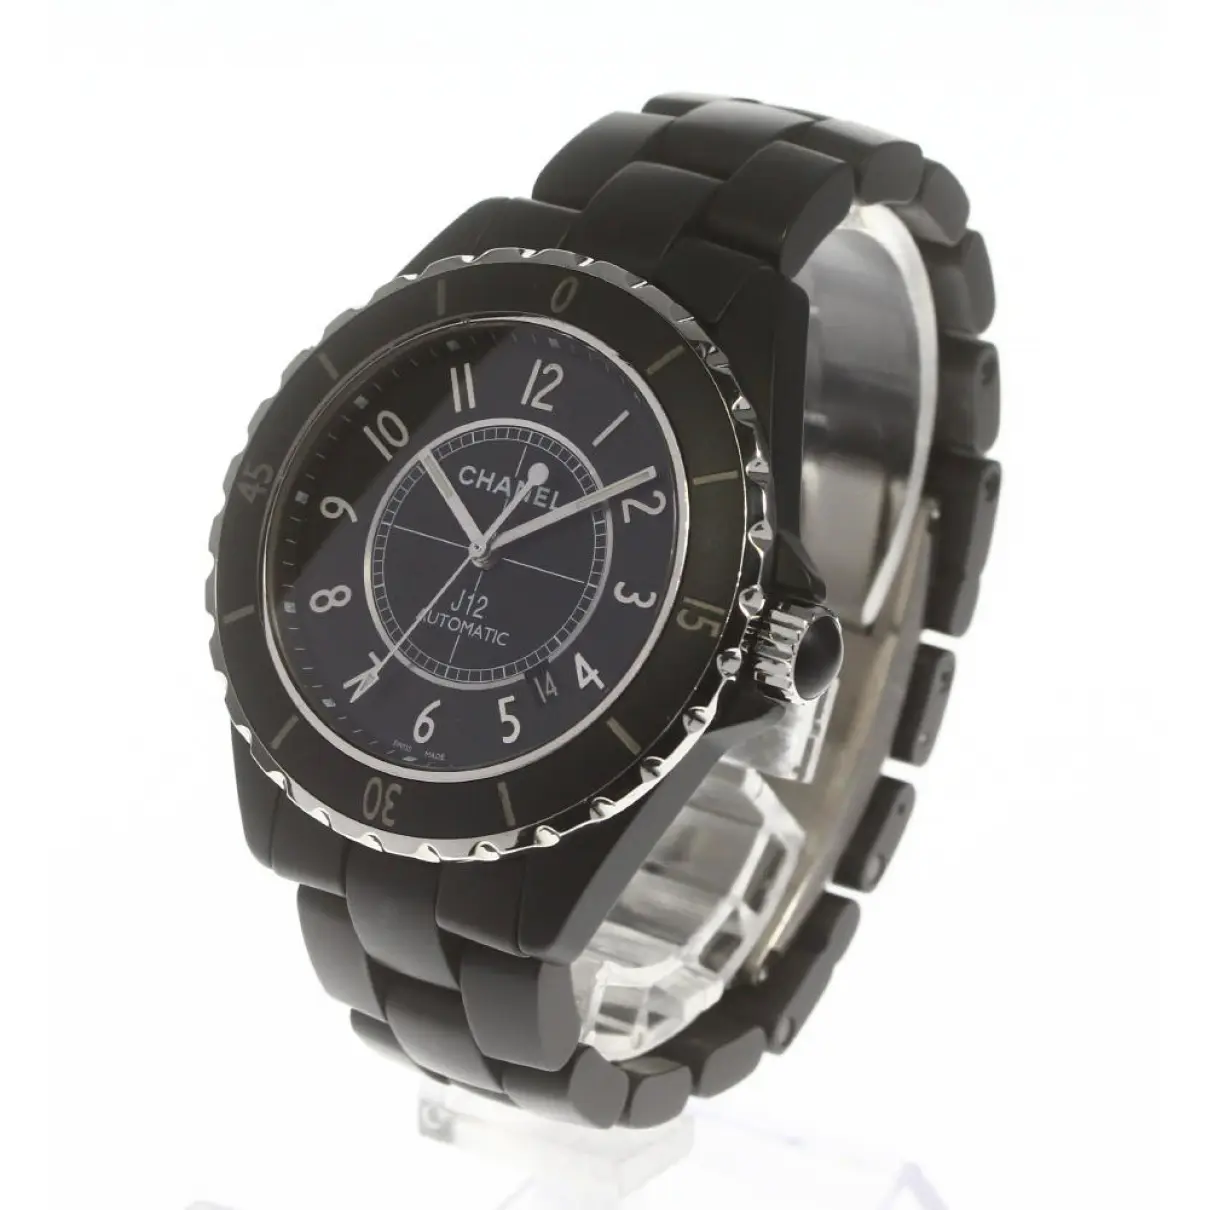 Buy Chanel Watch online